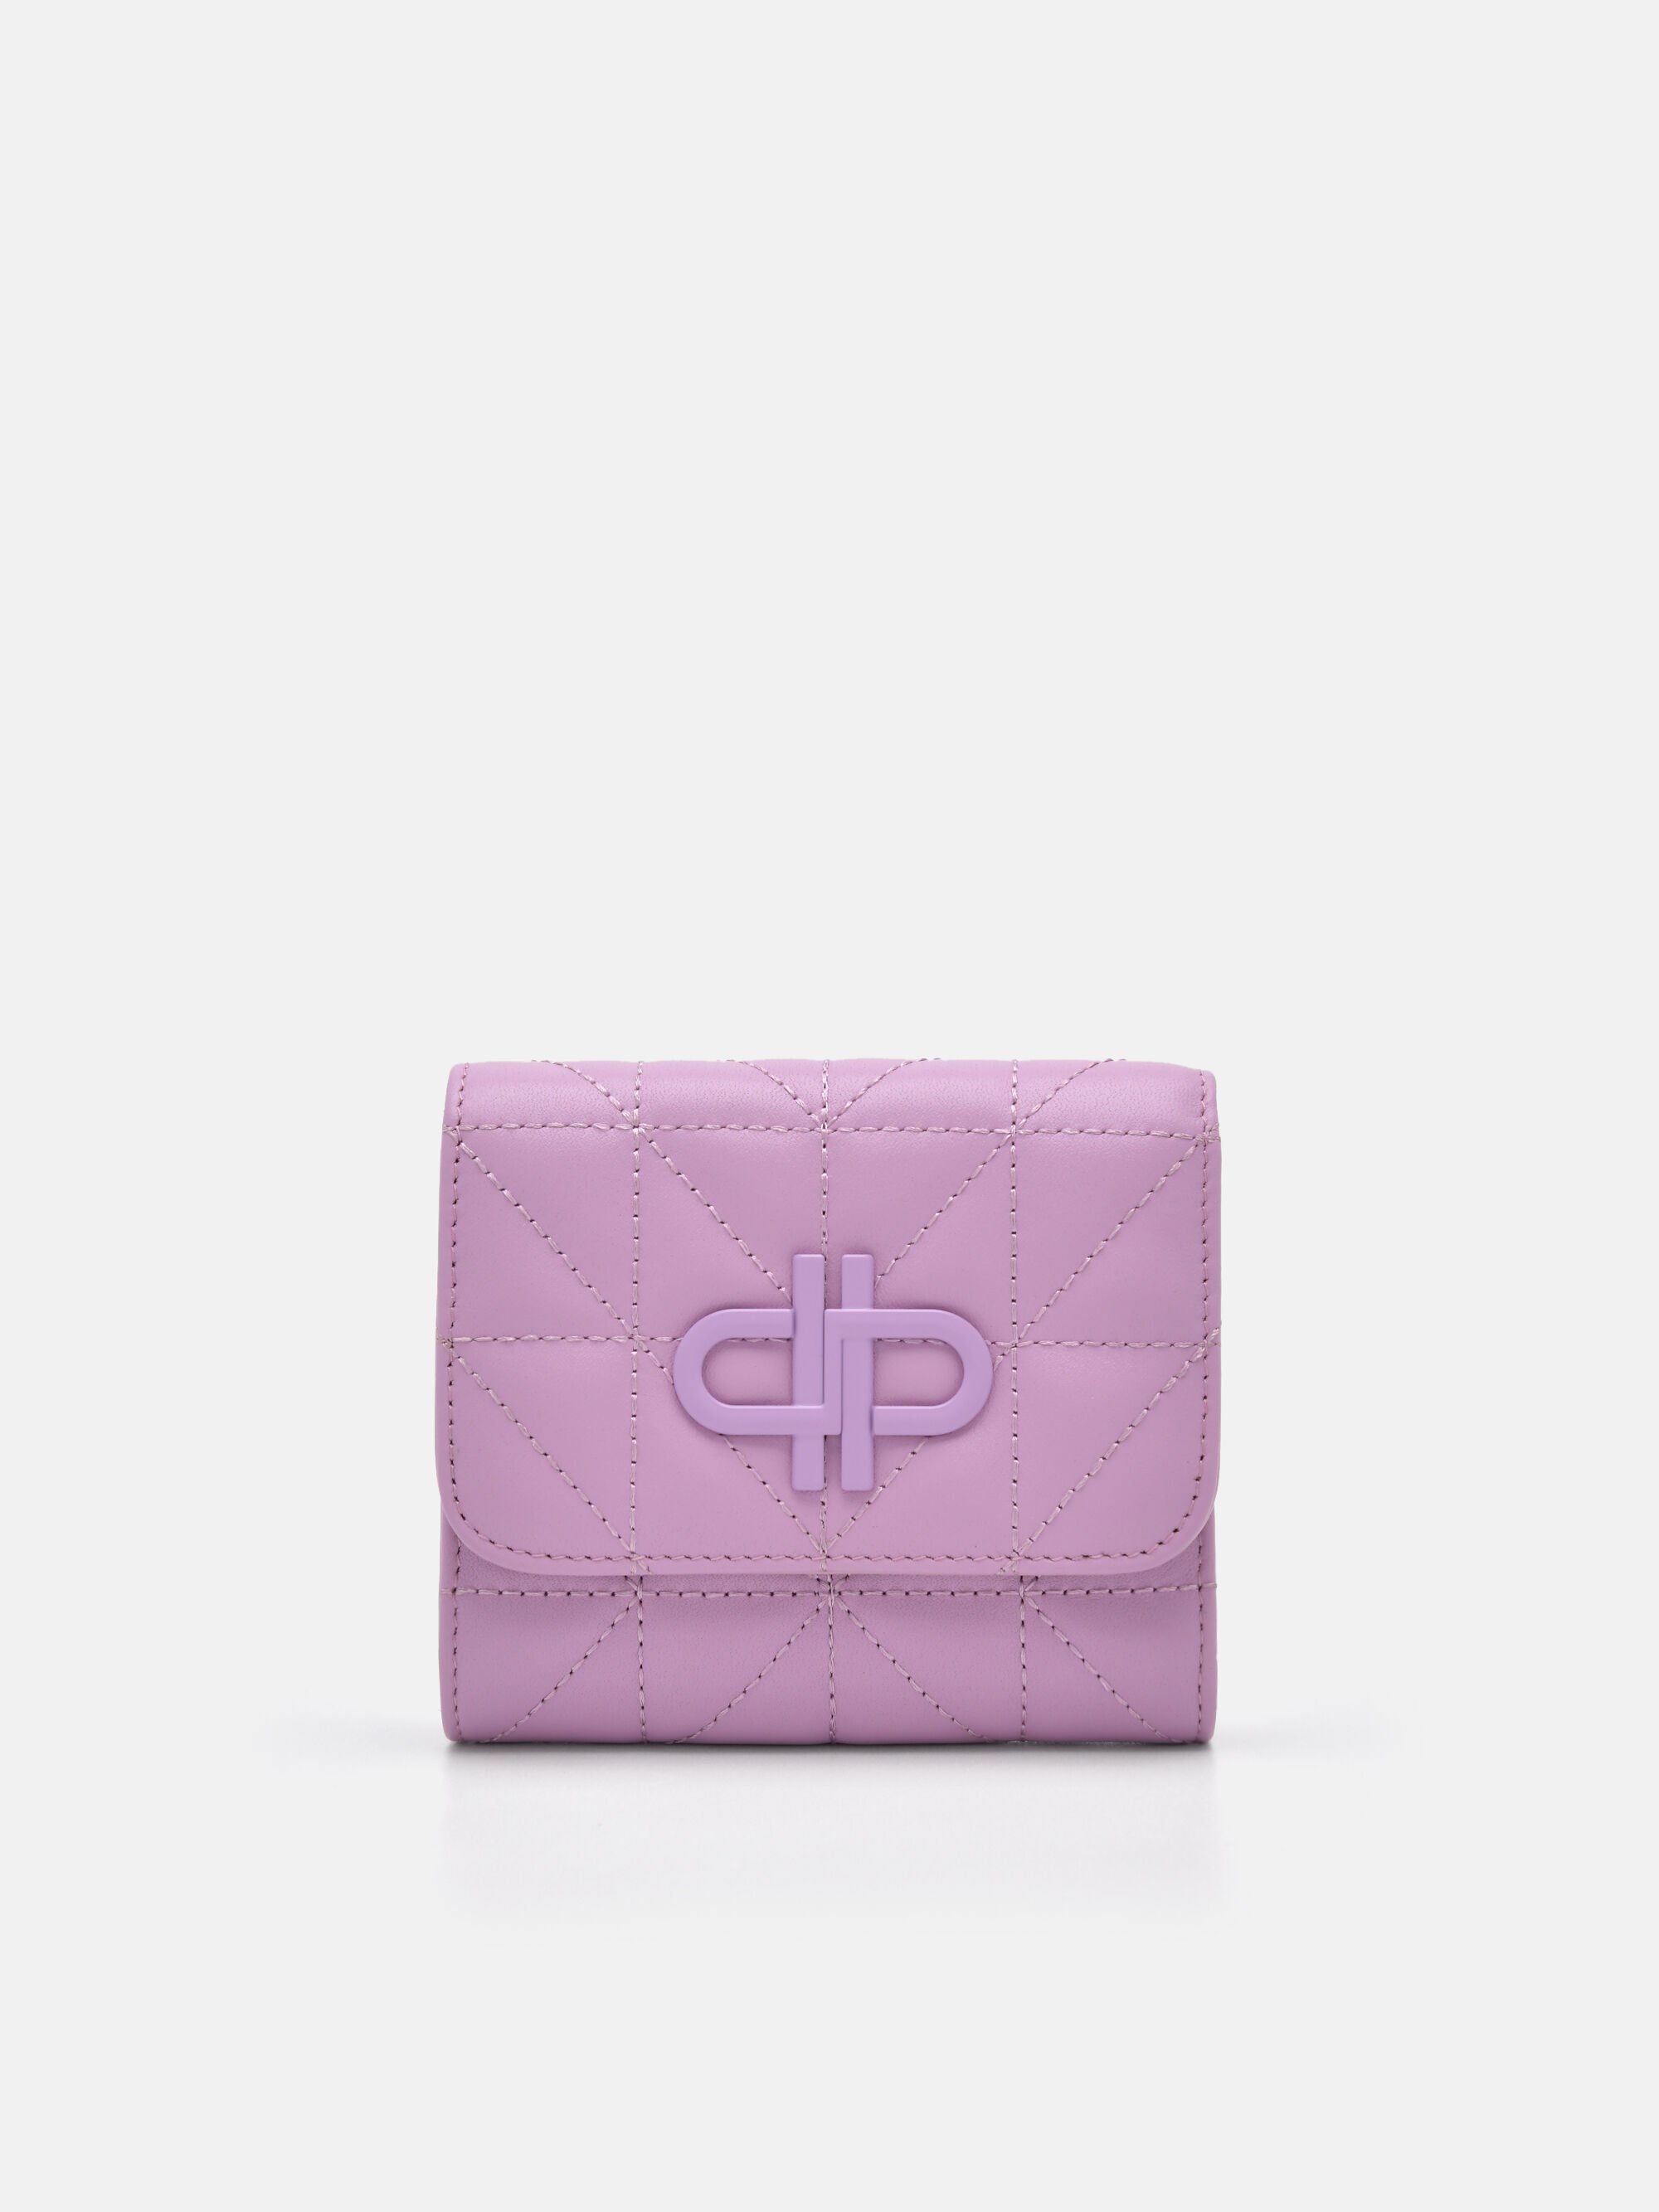 PEDRO Icon Leather Tri-Fold Wallet in Pixel, Purple